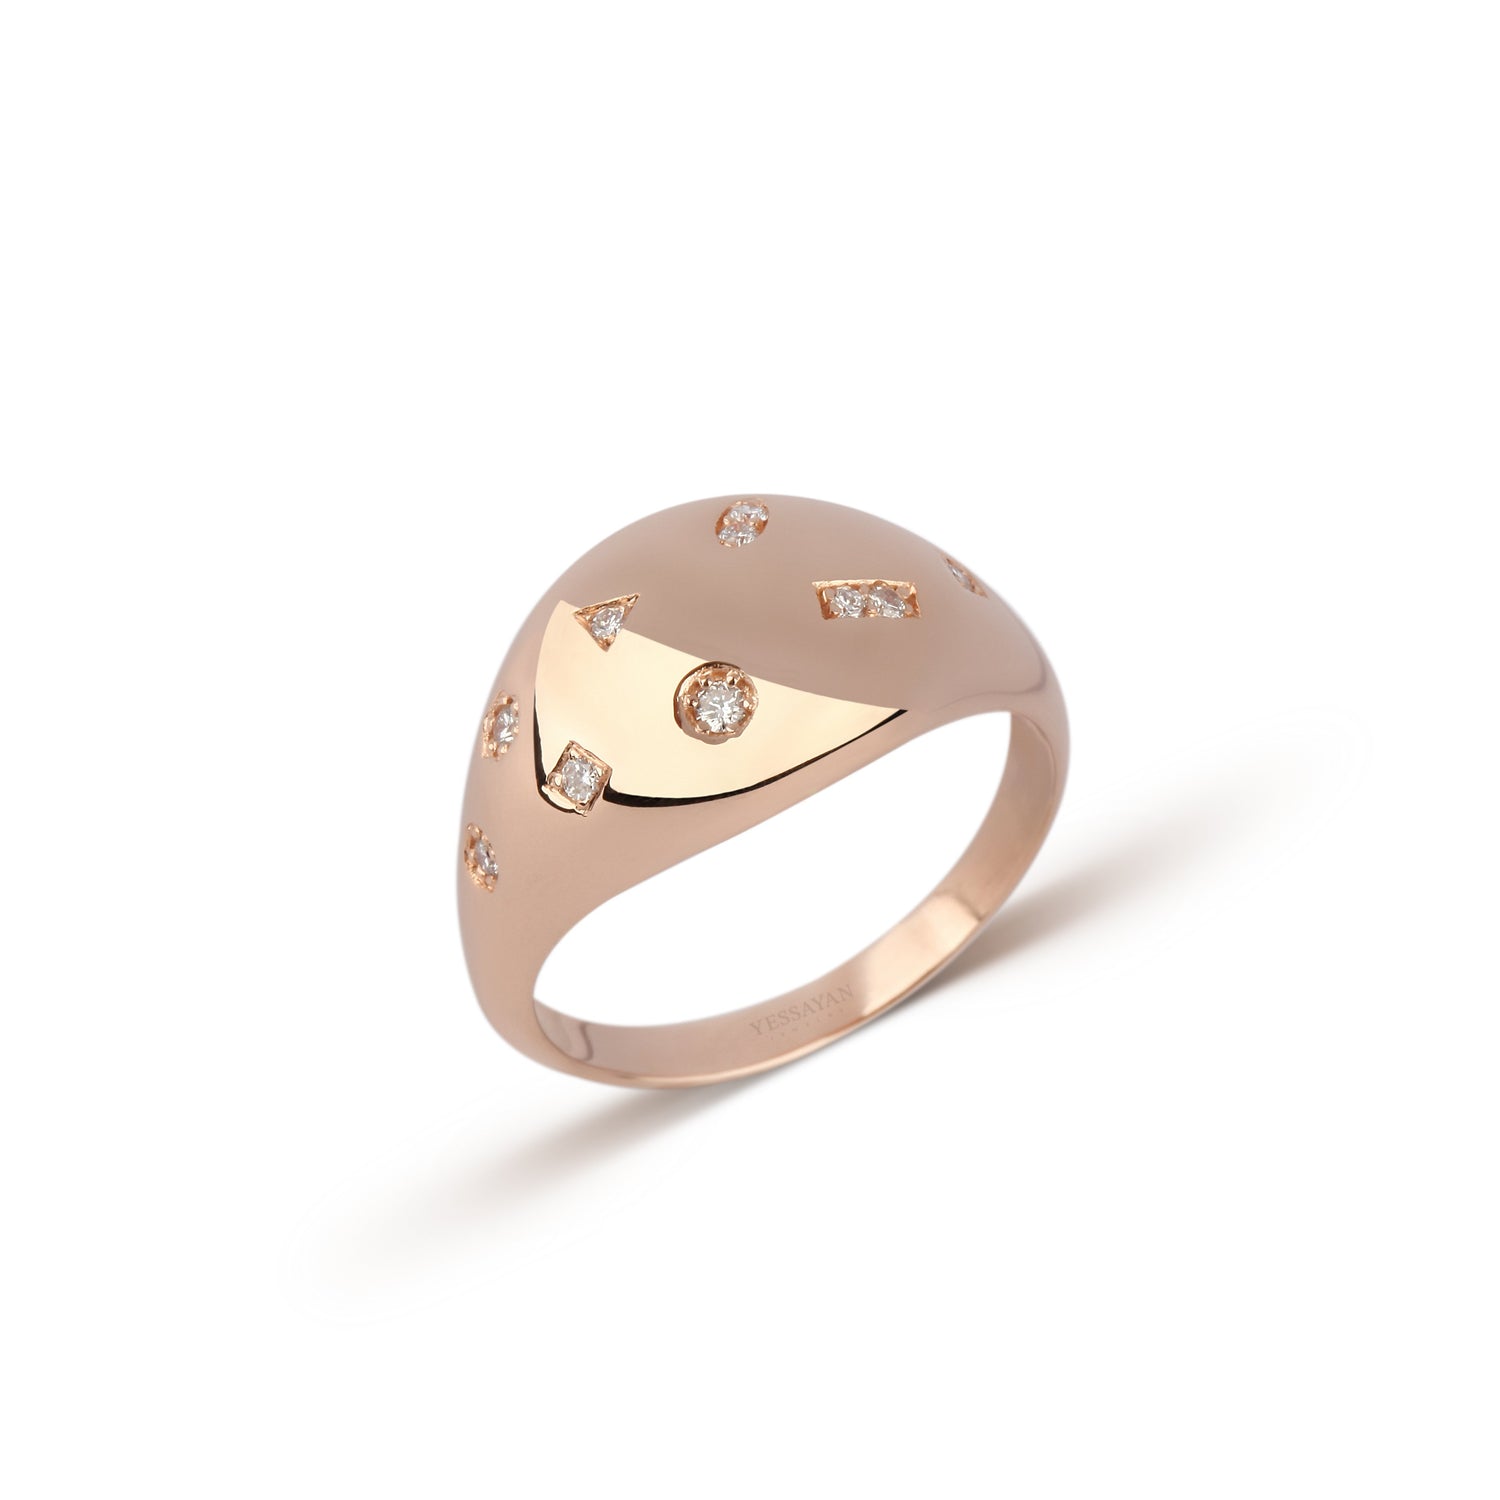 Rose Gold & Diamond Ring | jewellery store | diamond rings